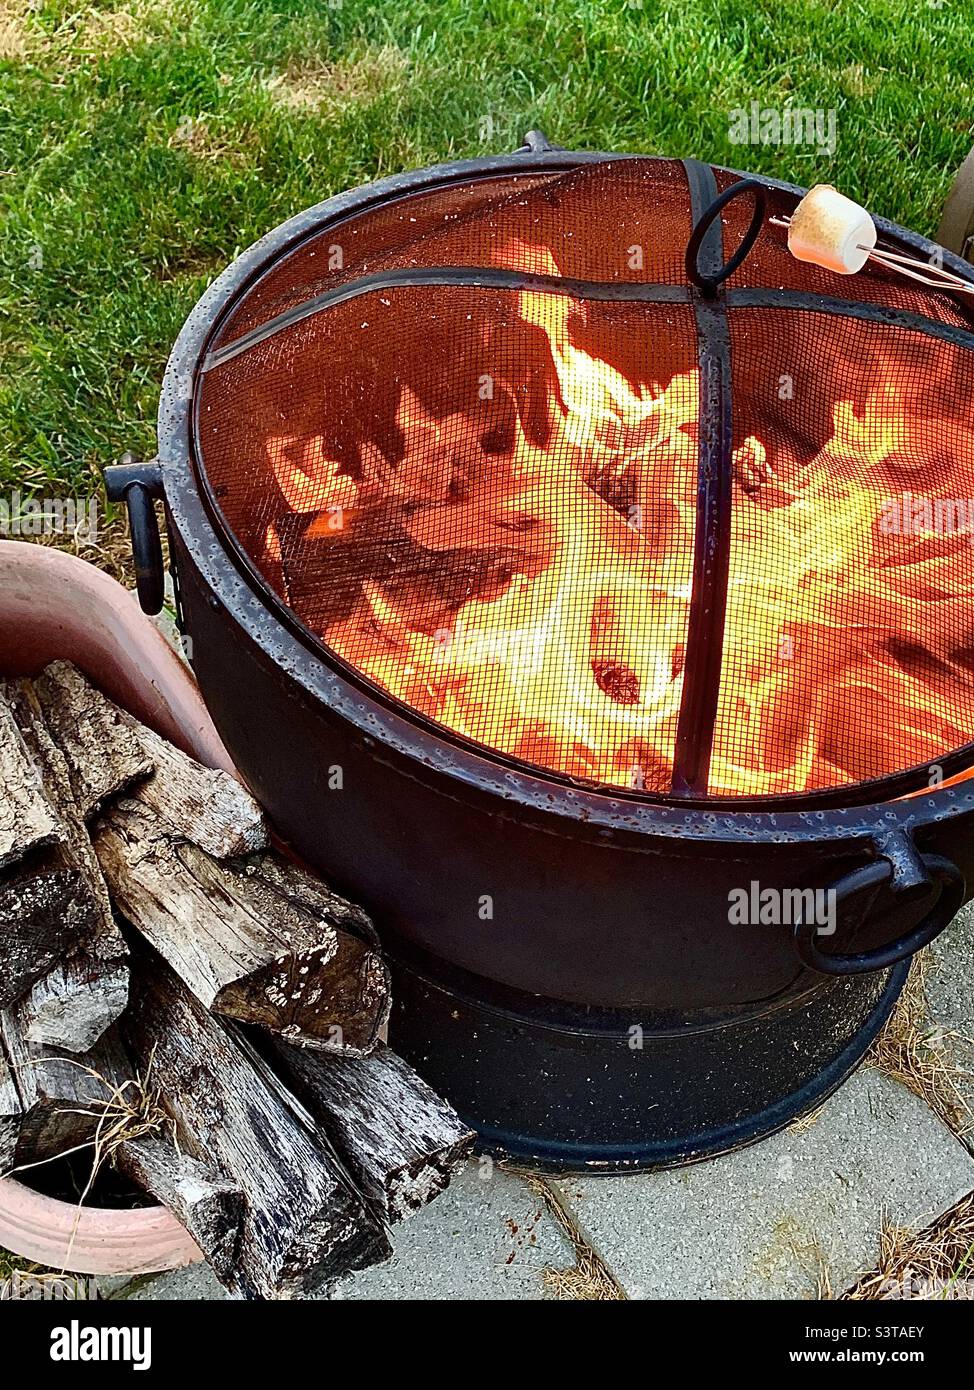 Marshmallow roasting over backyard fire pit Stock Photo